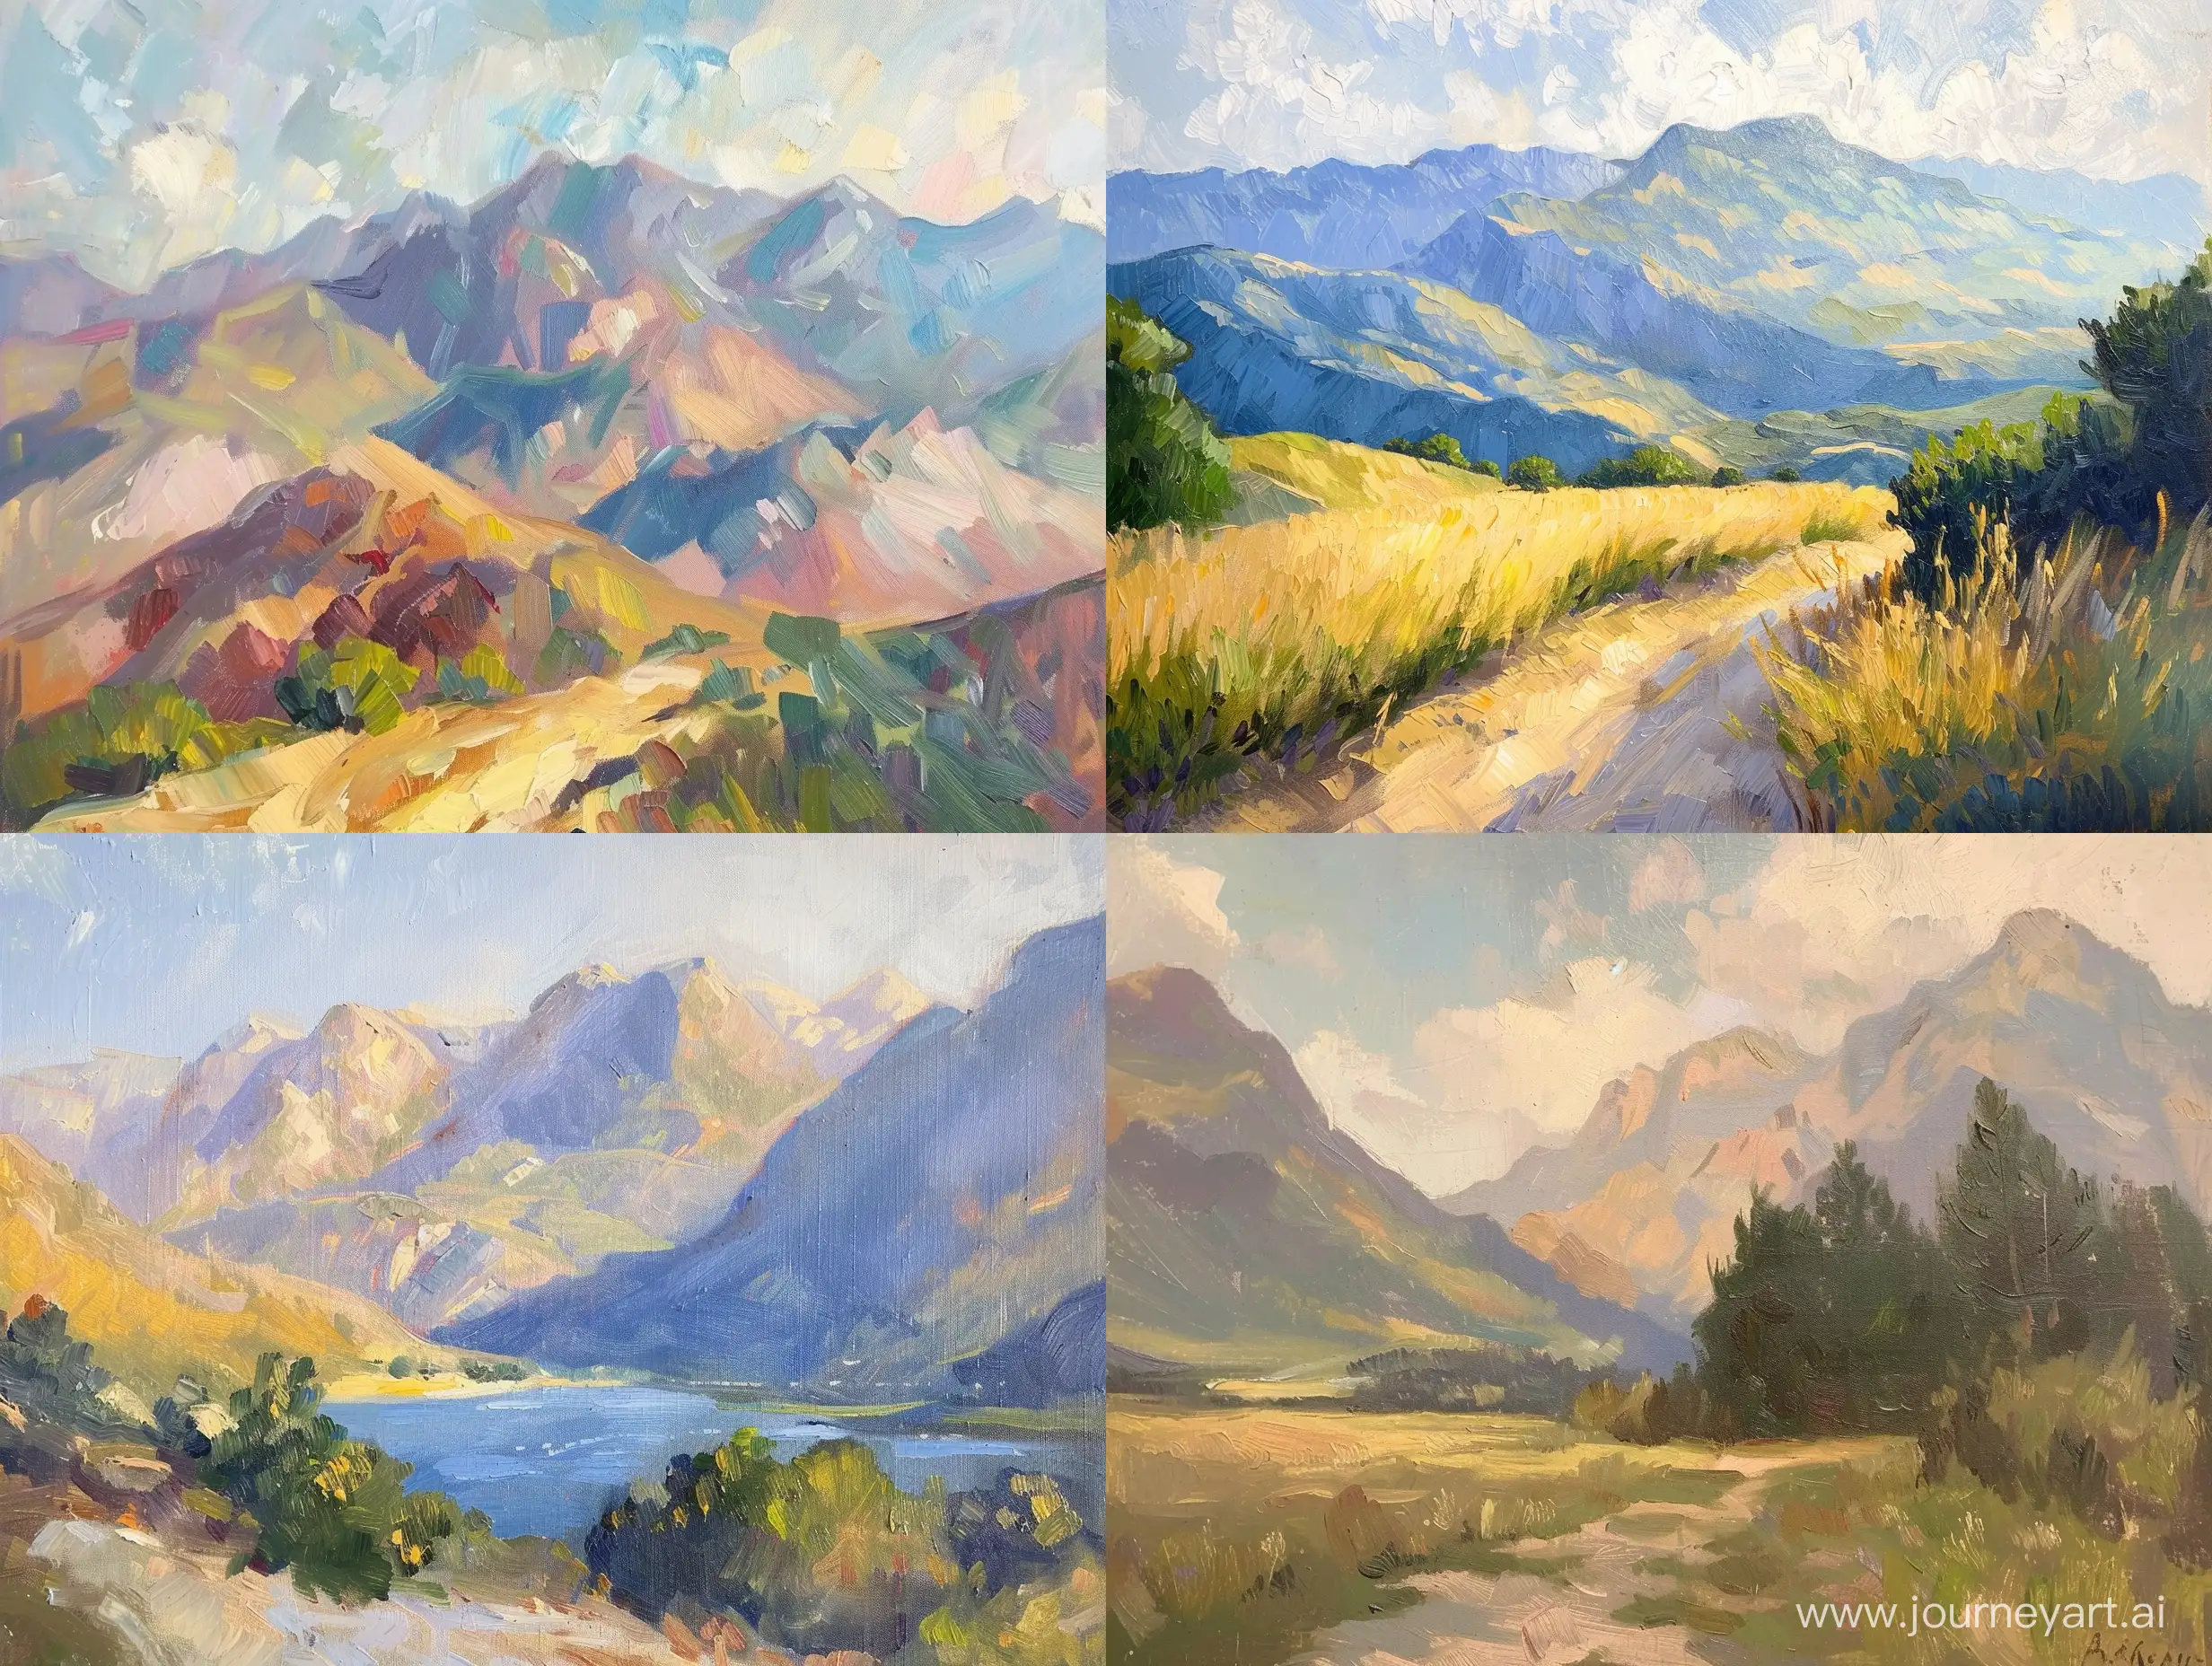 Vintage-SemiImpressionist-Oil-Painting-of-Mountainous-Landscape